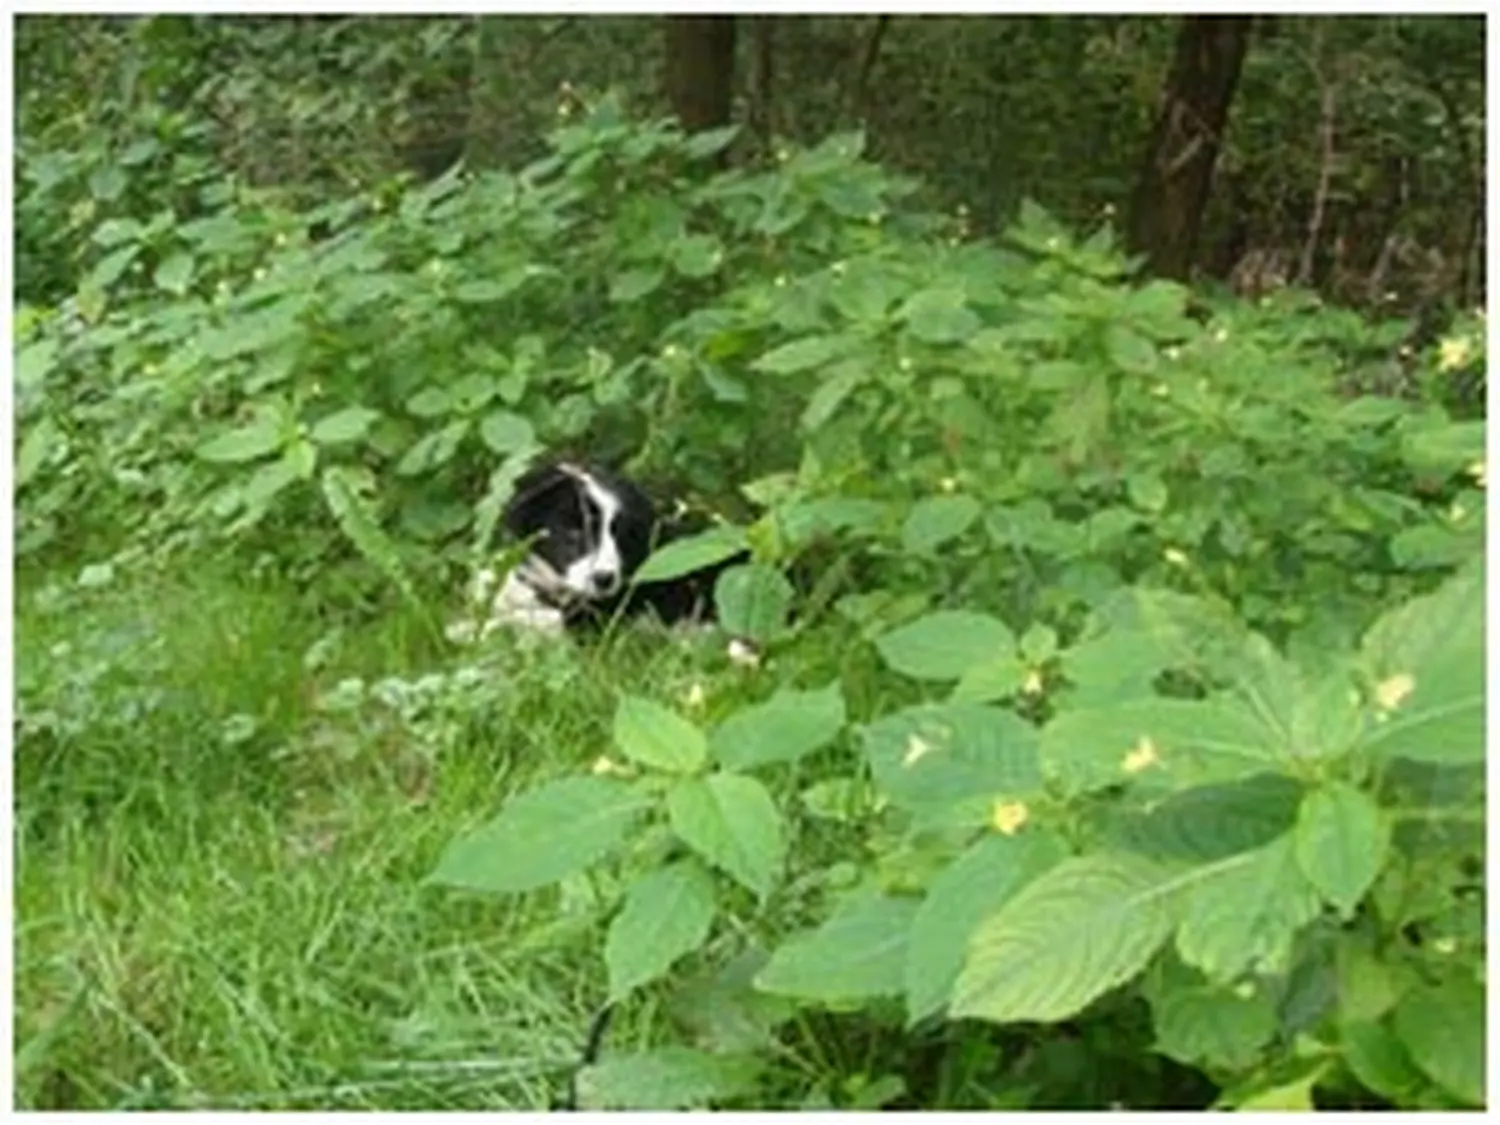 Hundeschule Lupus-Hunde gehen im Wald spazieren